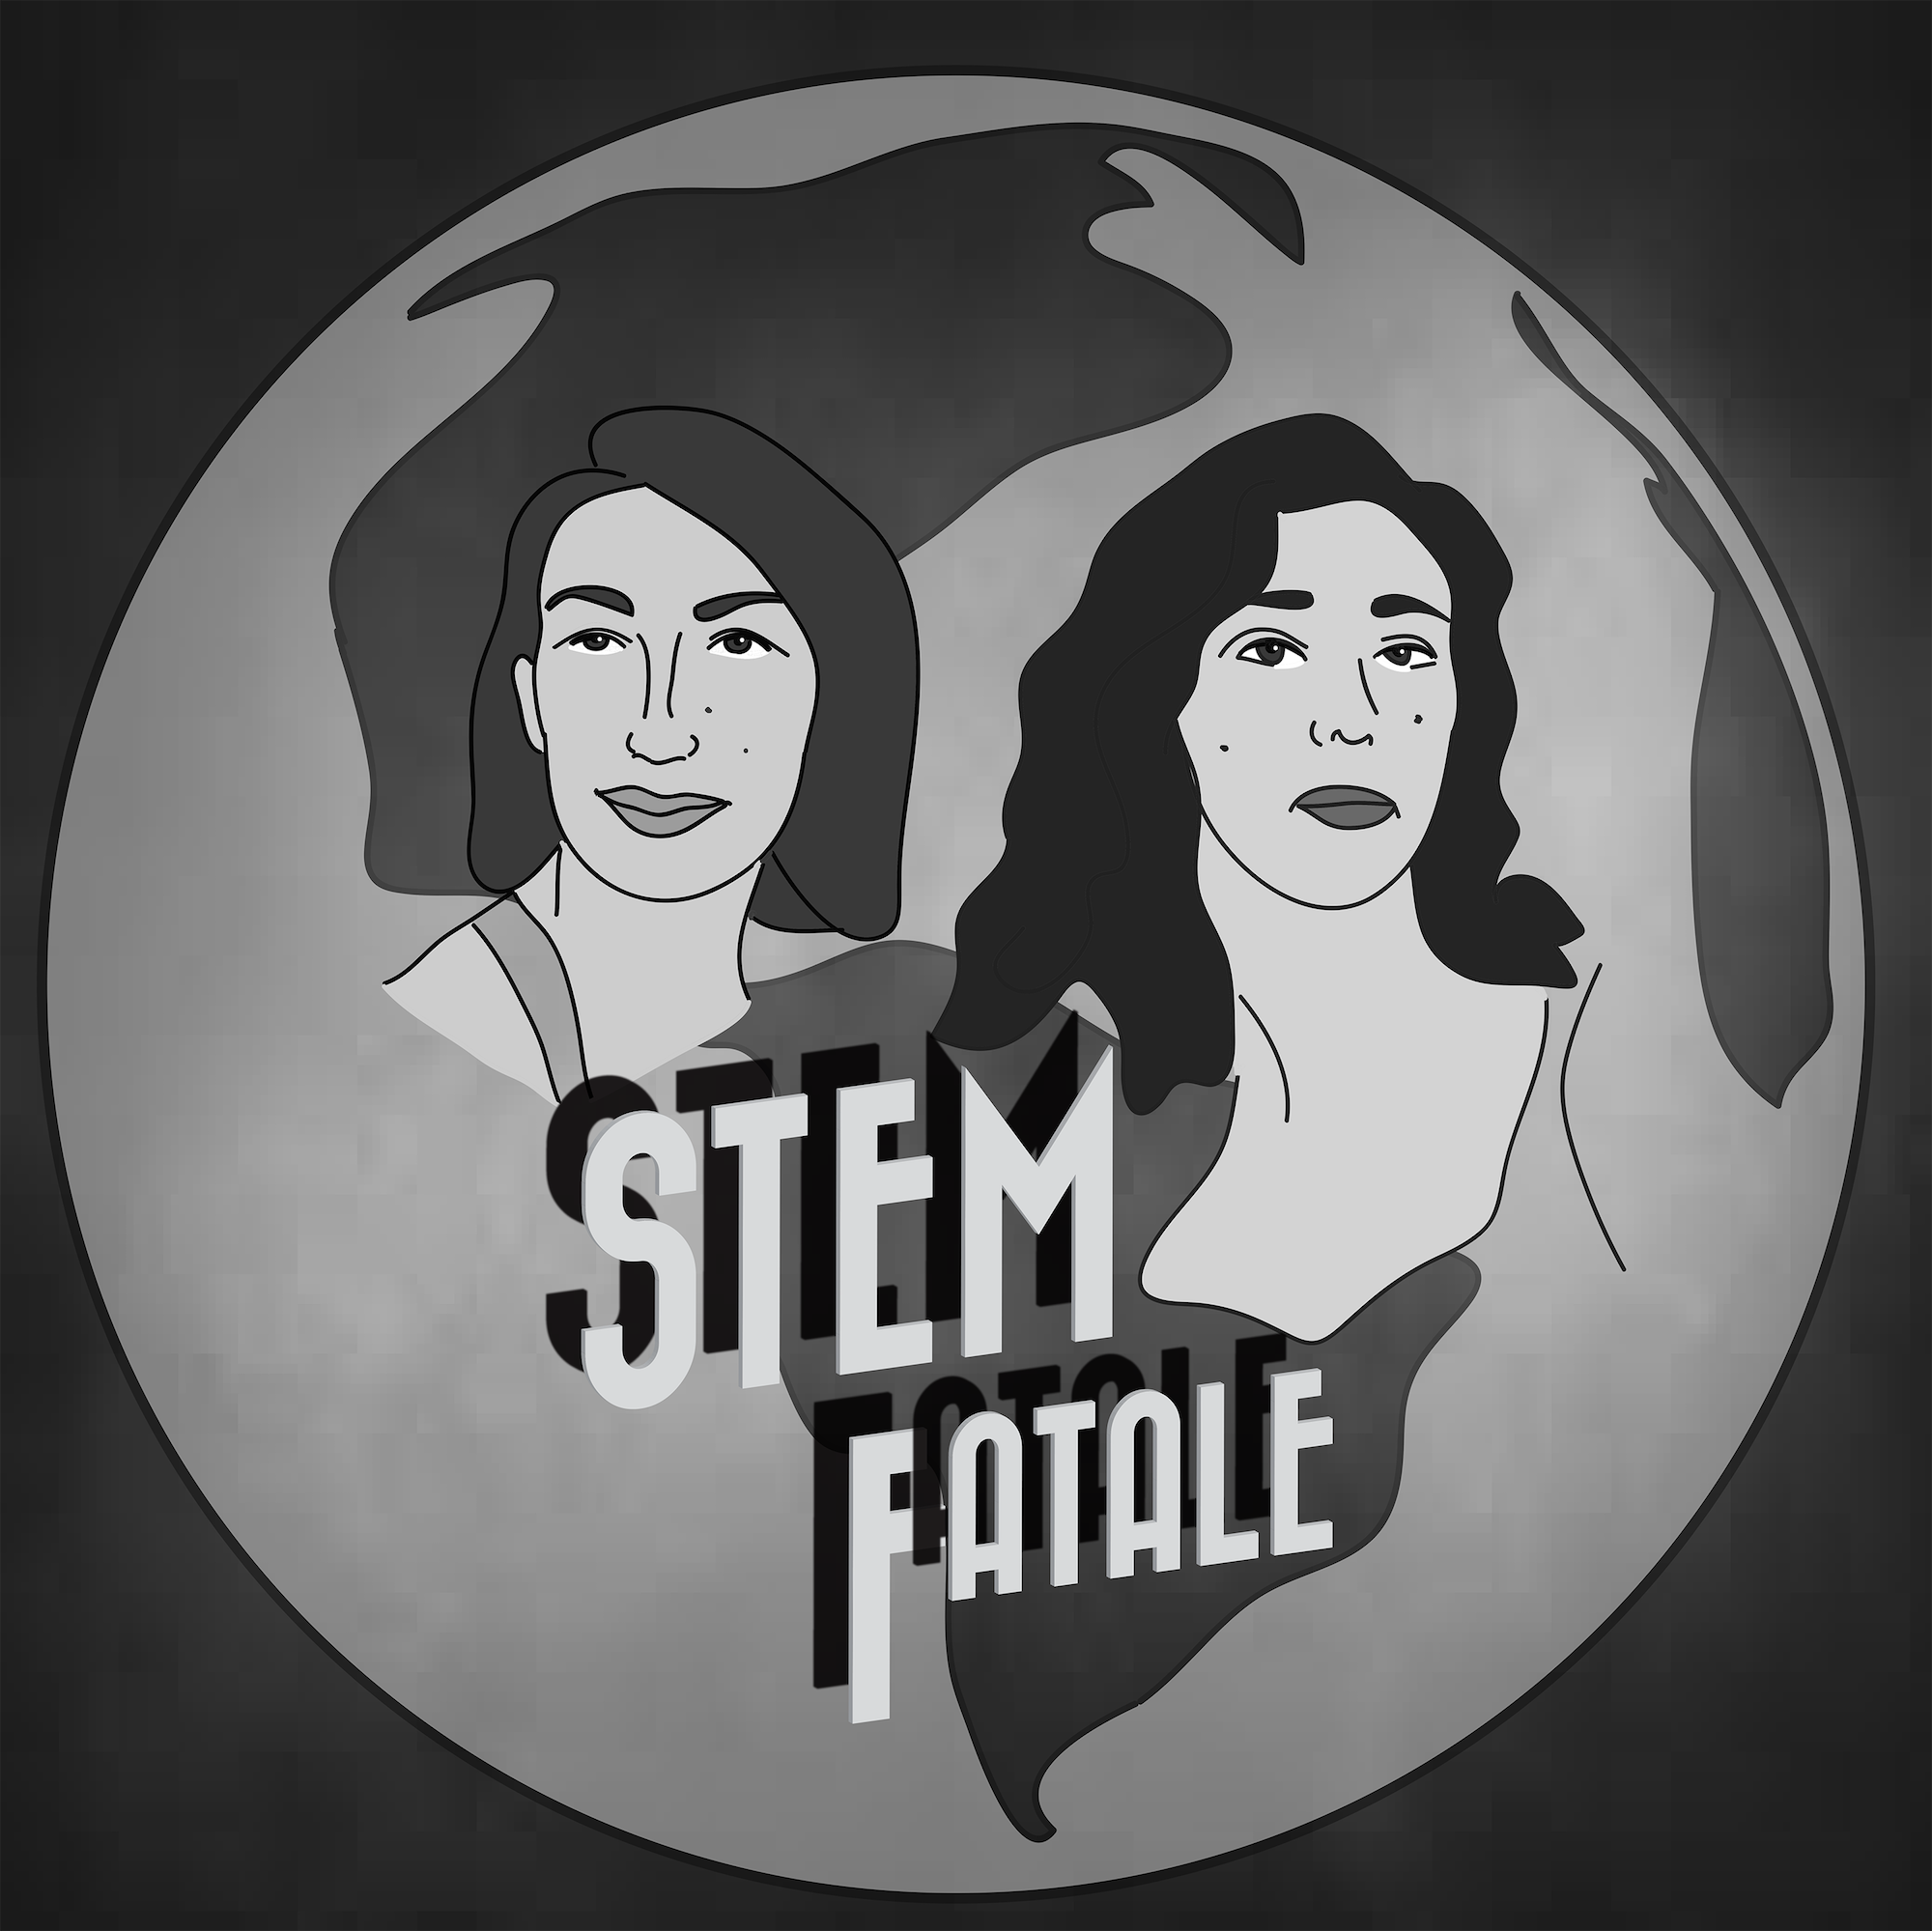 Episode 000 - STEM Fatale Promo